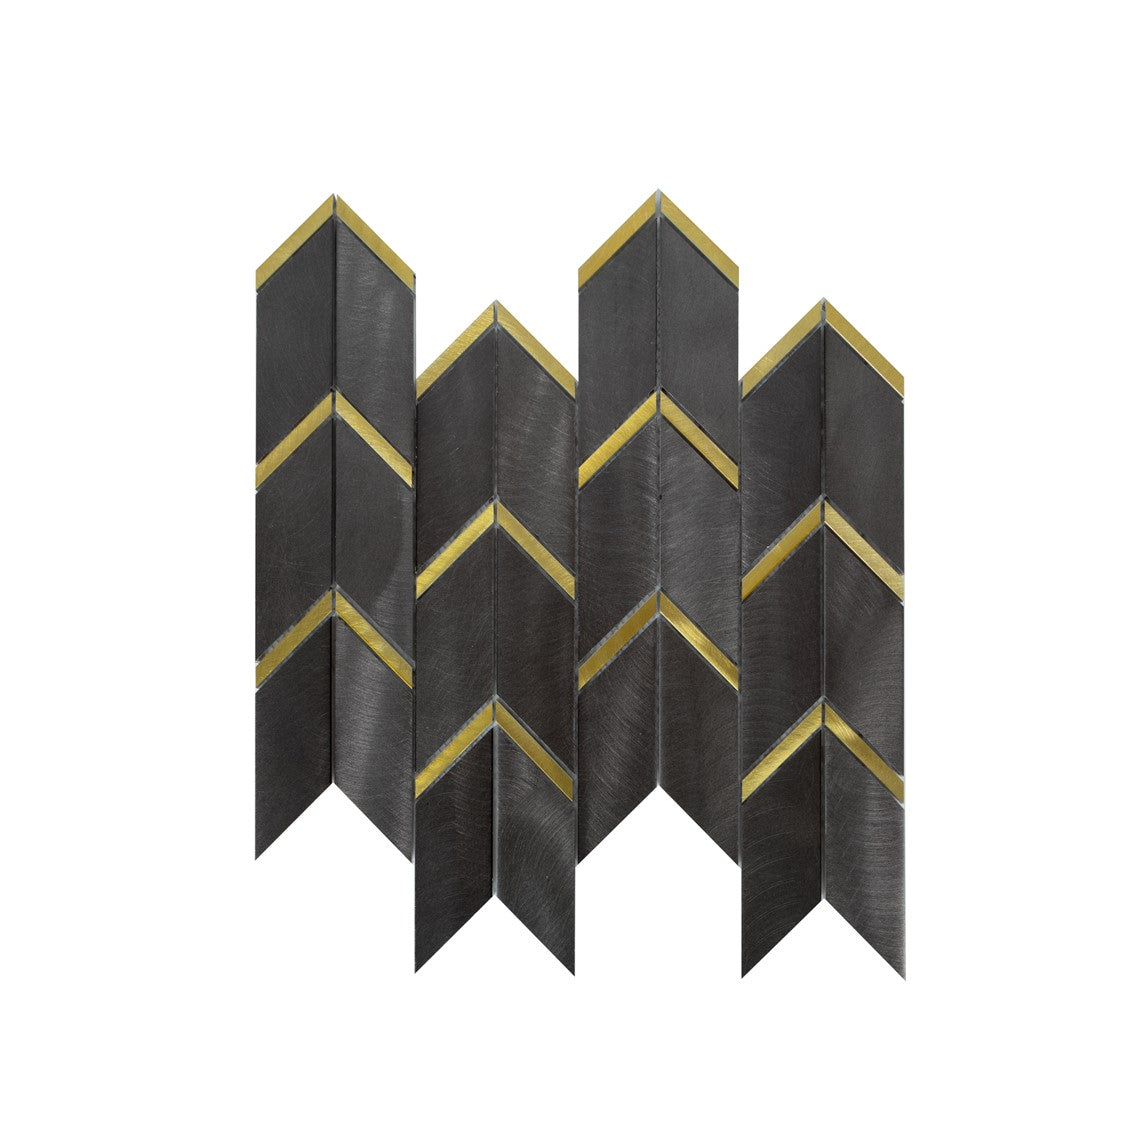 Twilight Mixed Size Aluminum Chevron Mosaic Wall Tile in Chrome and Gold - 11 Square Feet Per Carton